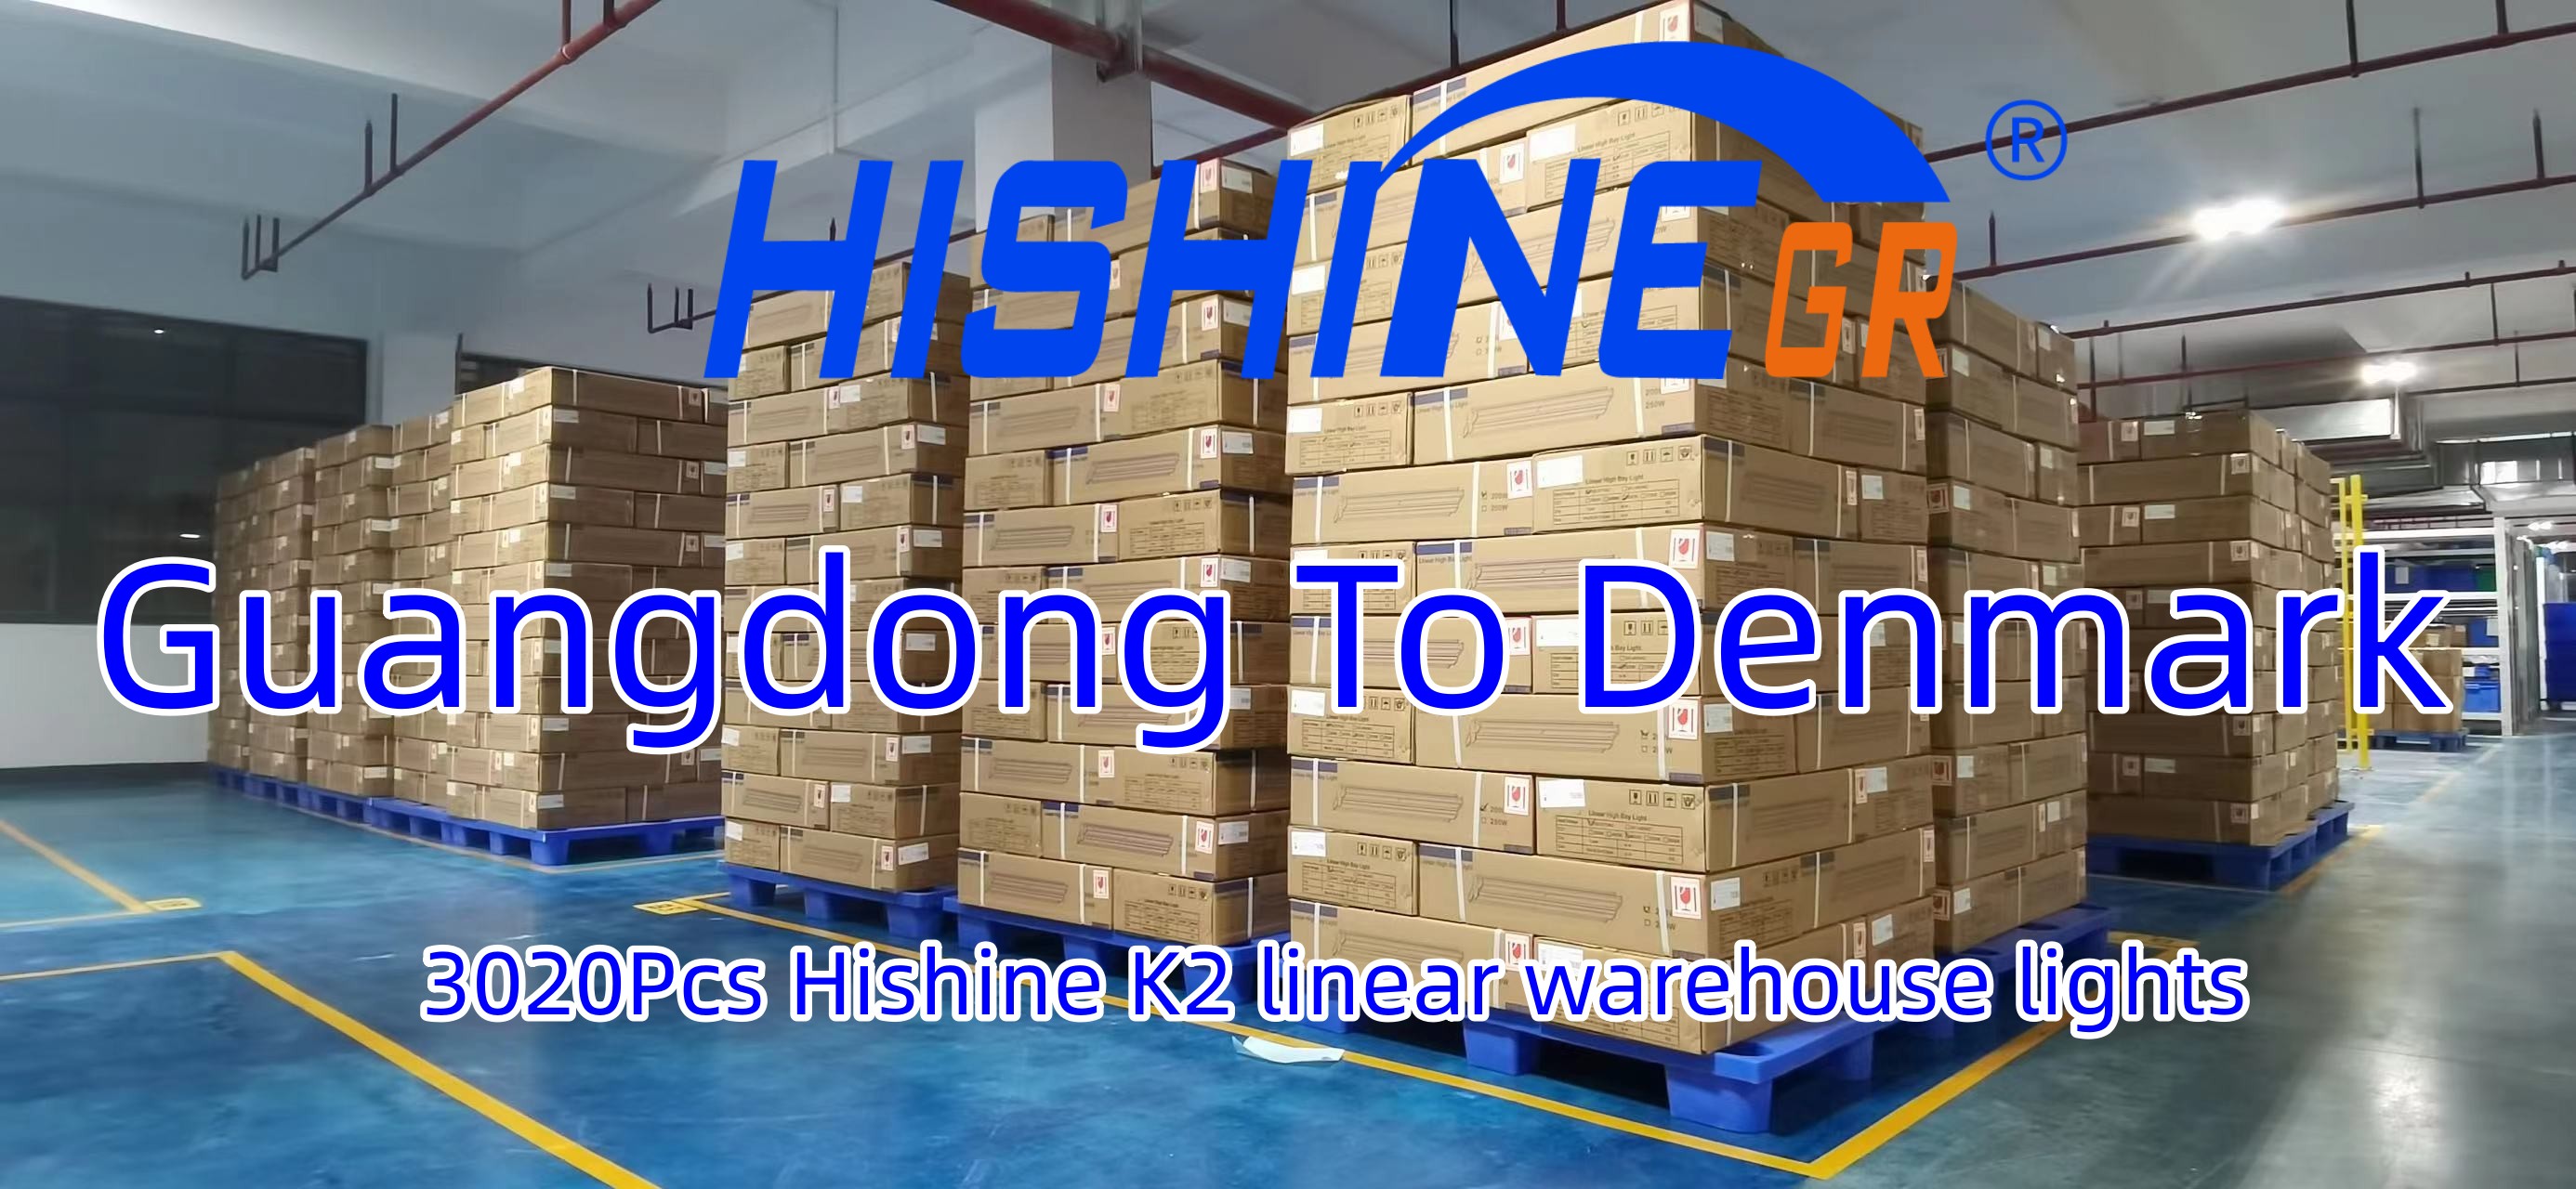 3020 Pcs Hishine K2 linear warehouse light form Guangdong to Denmark